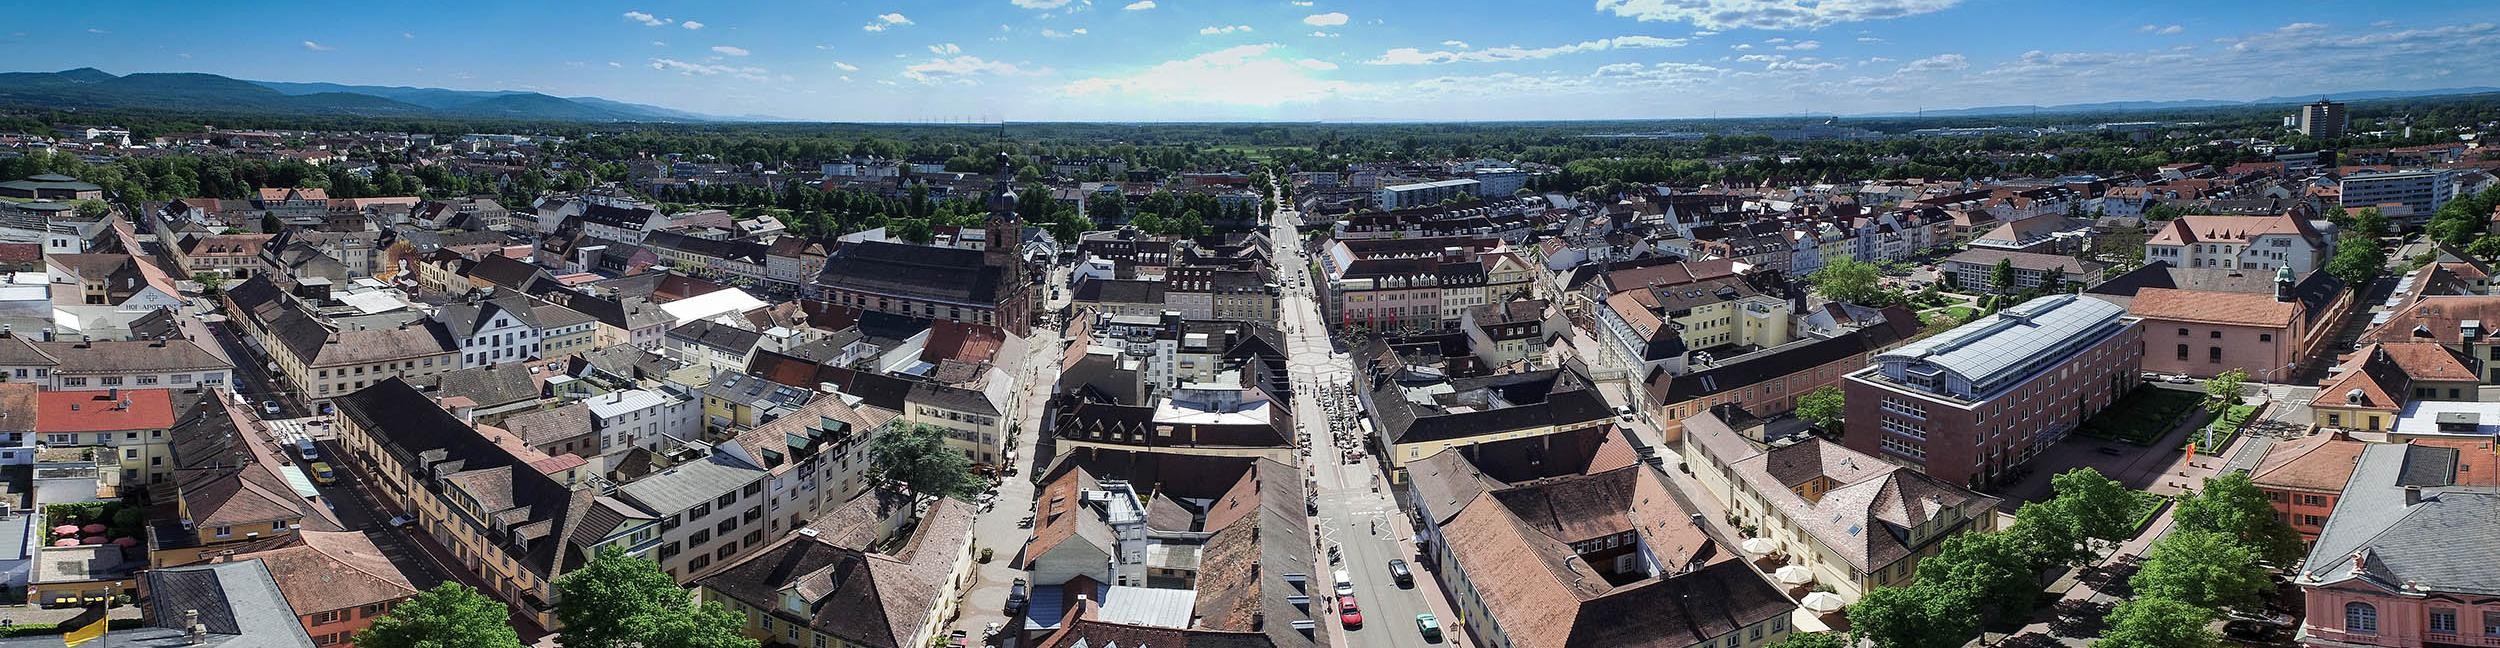 Luftaufnahme Innenstadt Stadt Rastatt